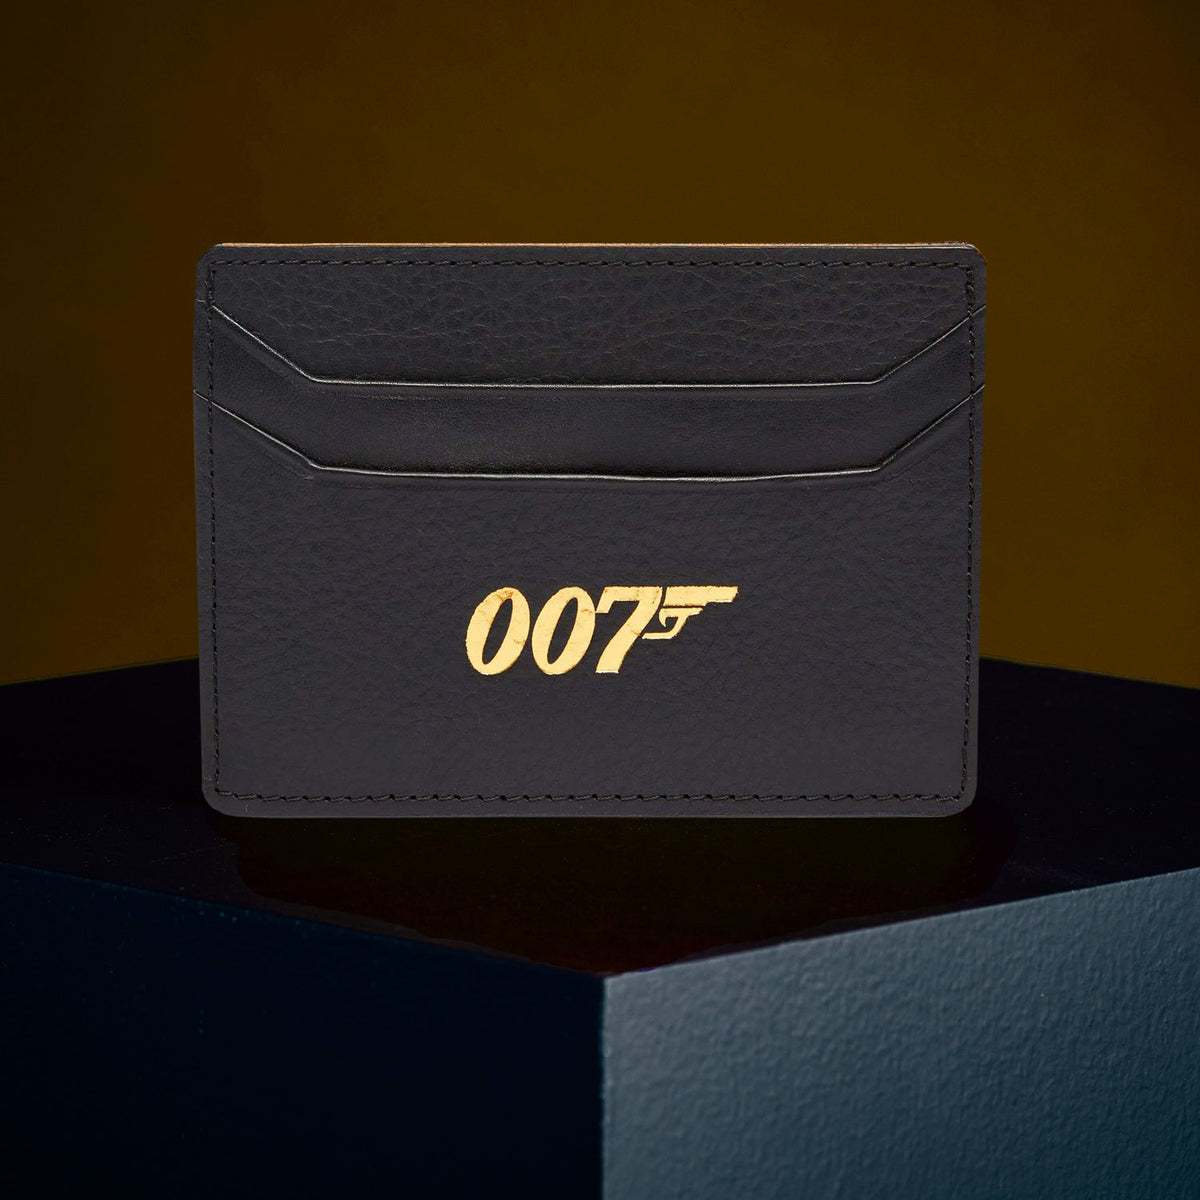 James Bond 007 Personalised Leather Card Holder - Black Edition